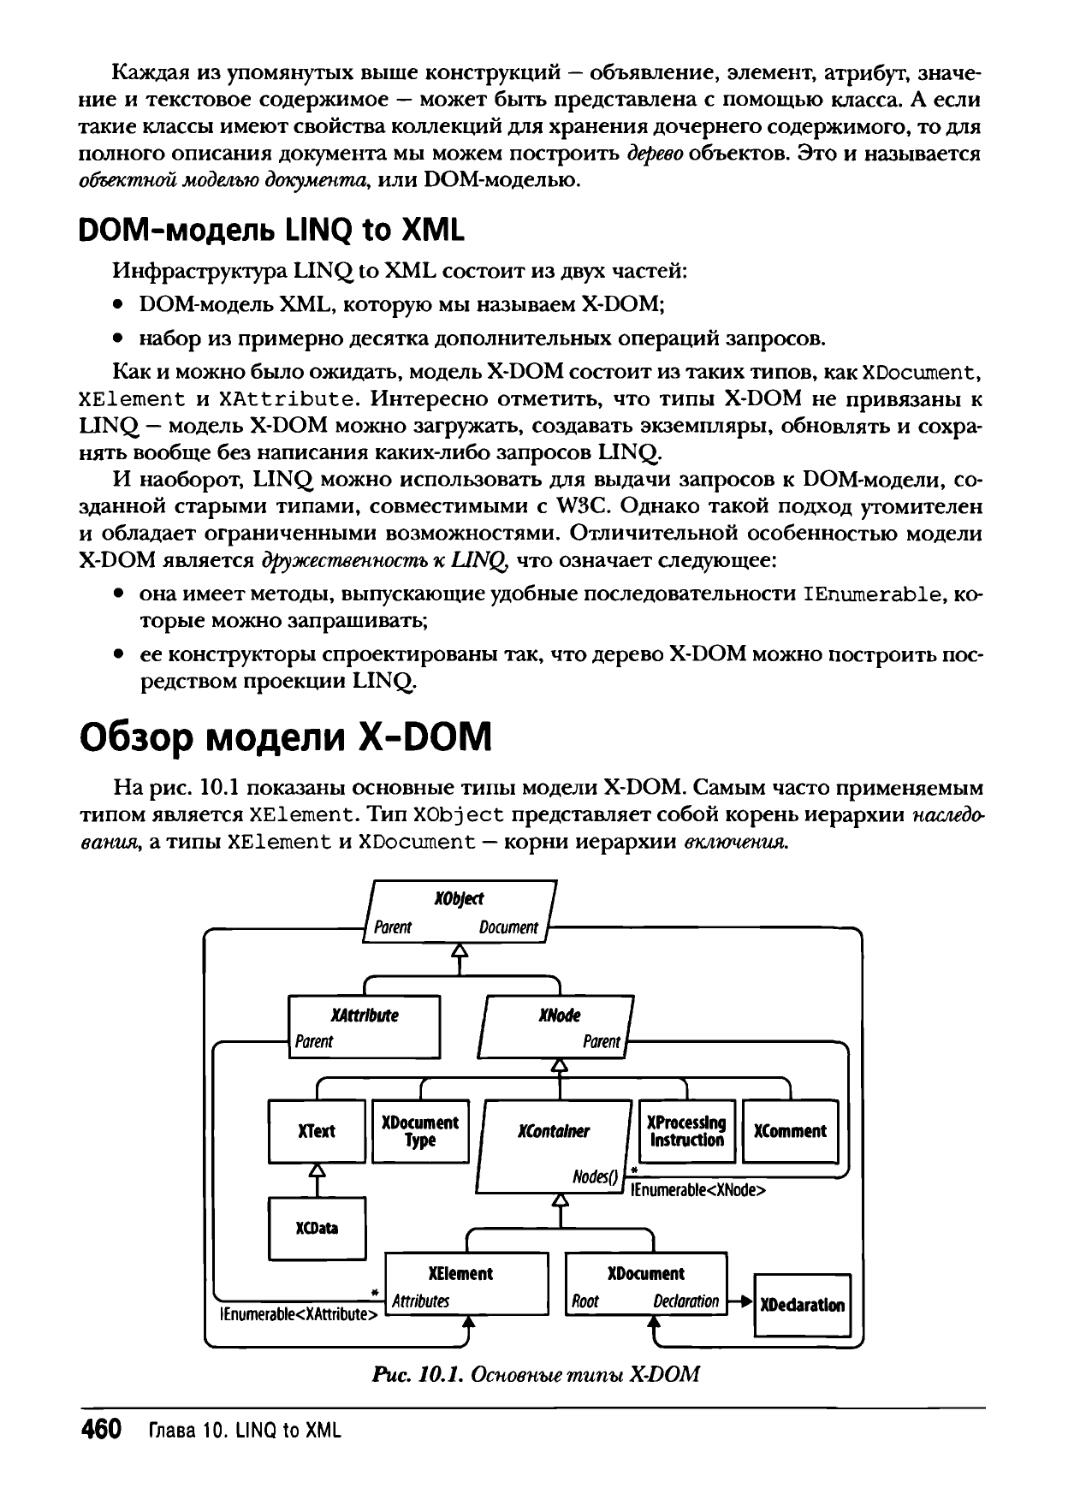 DOM-модель LINQ to XML
Обзор модели X-DOM